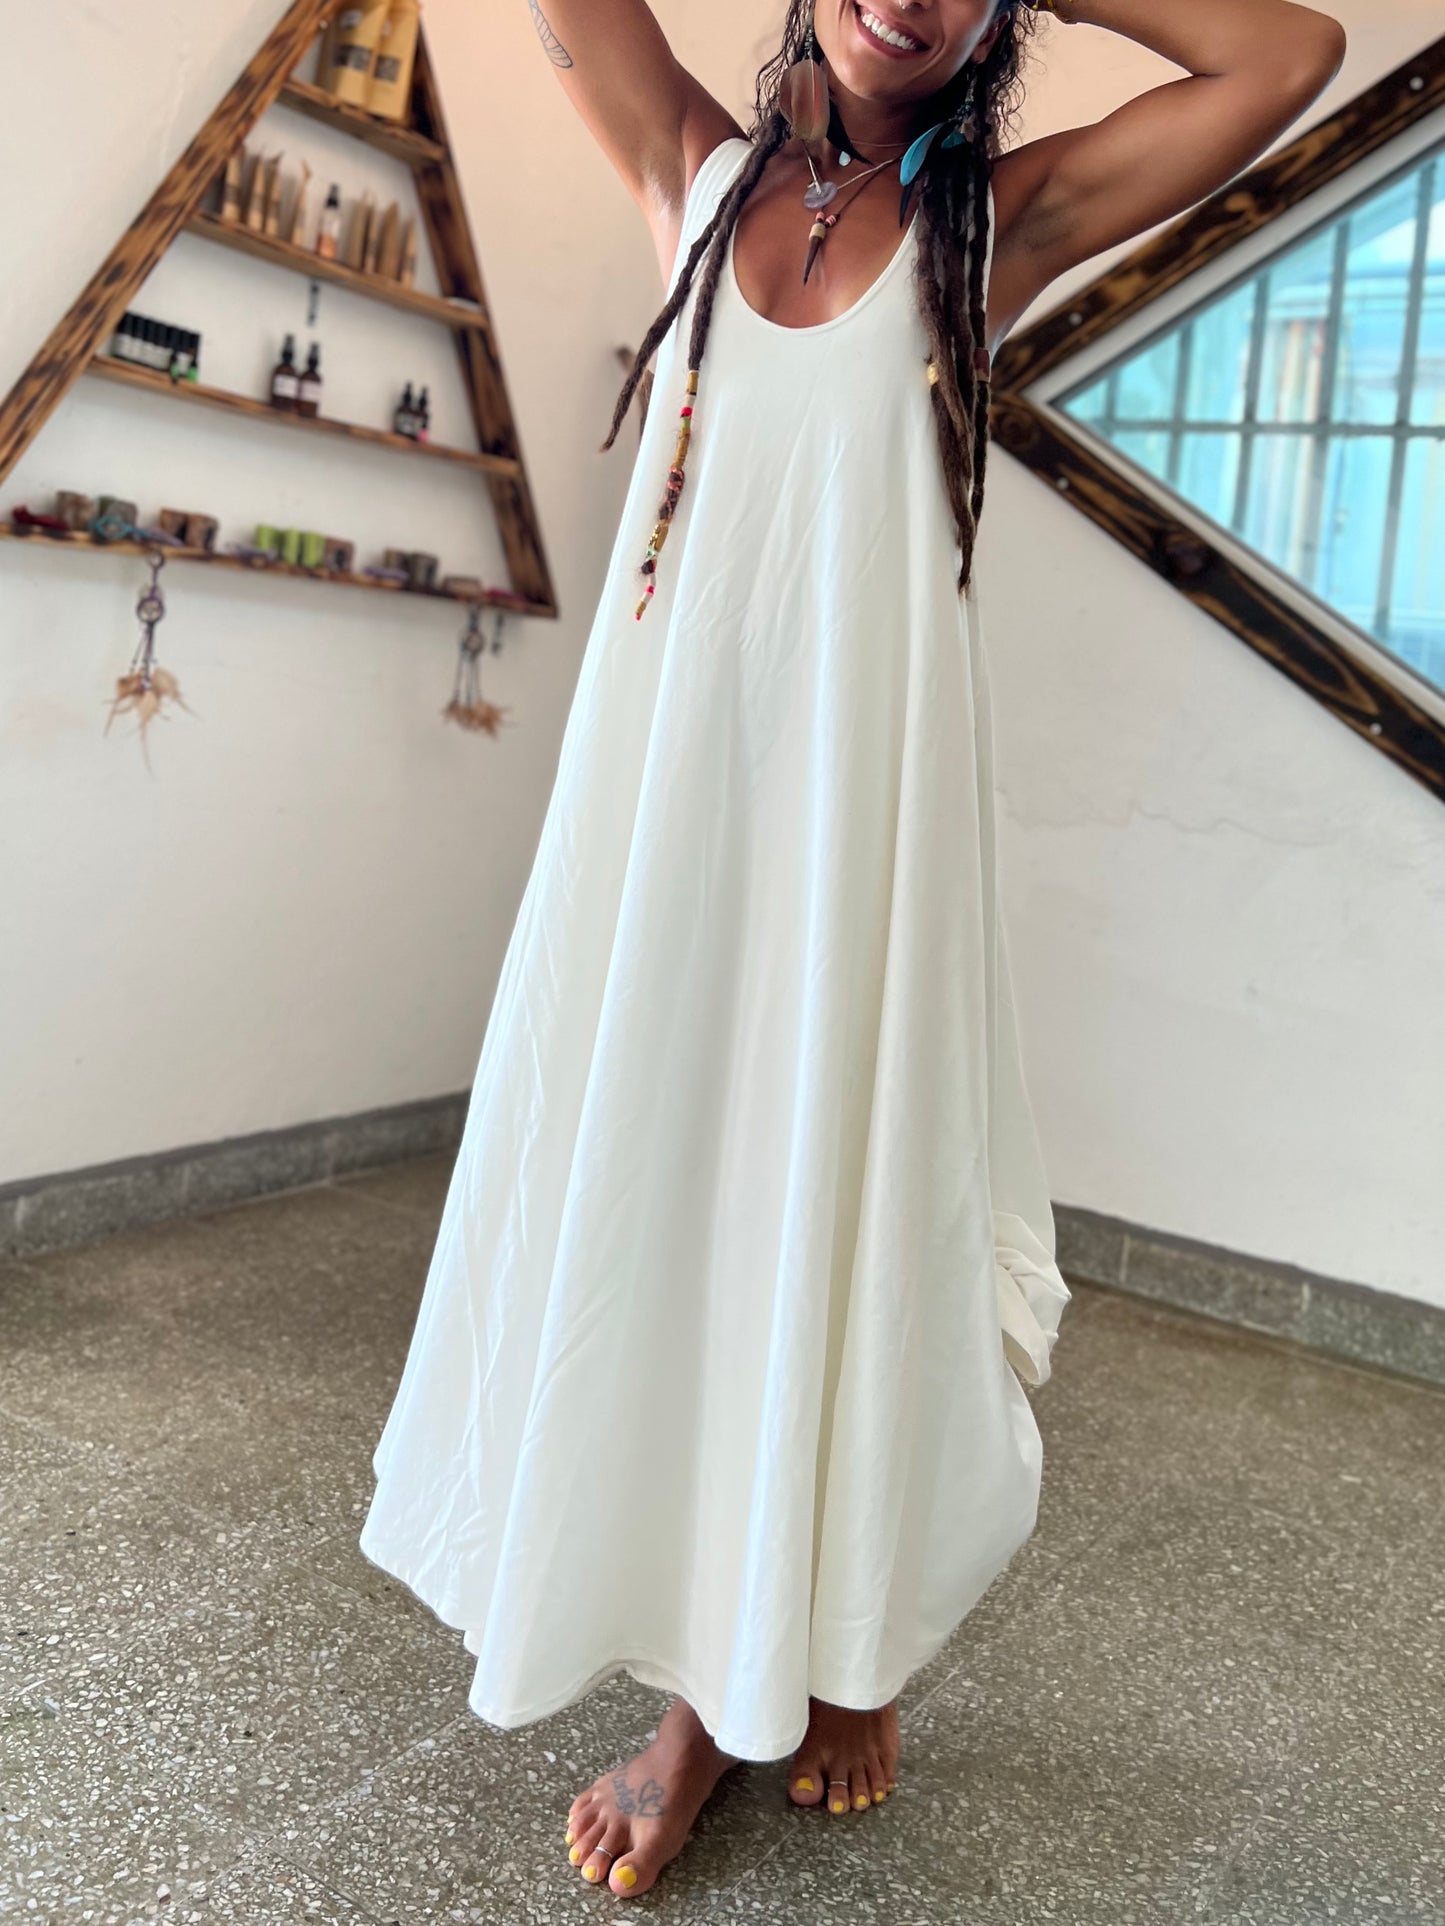 glorka white dress and shawl